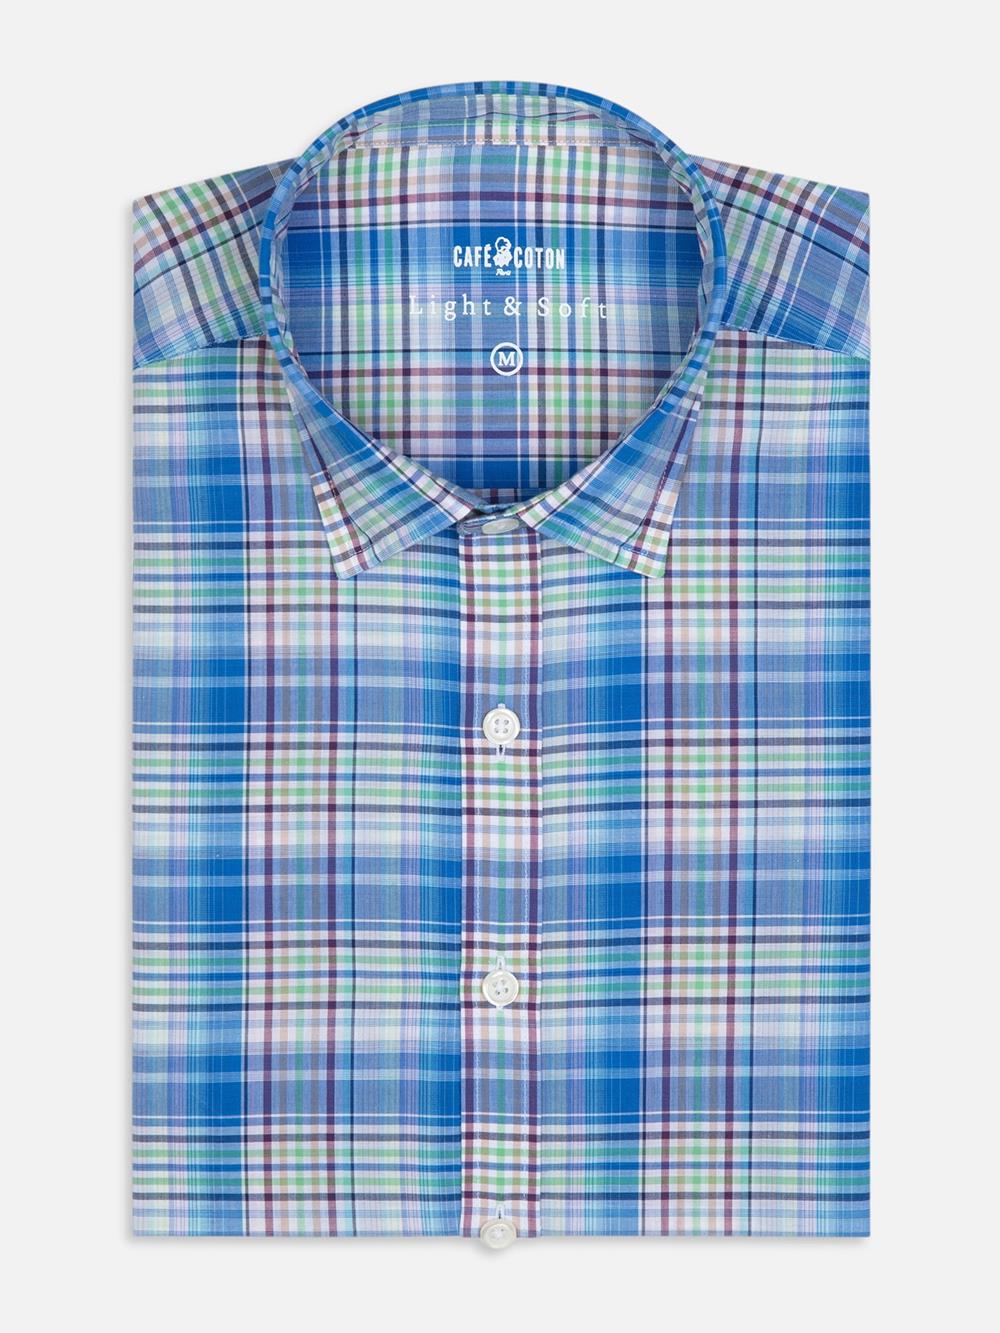 Gordon shirt in blue cotton voile with tartans